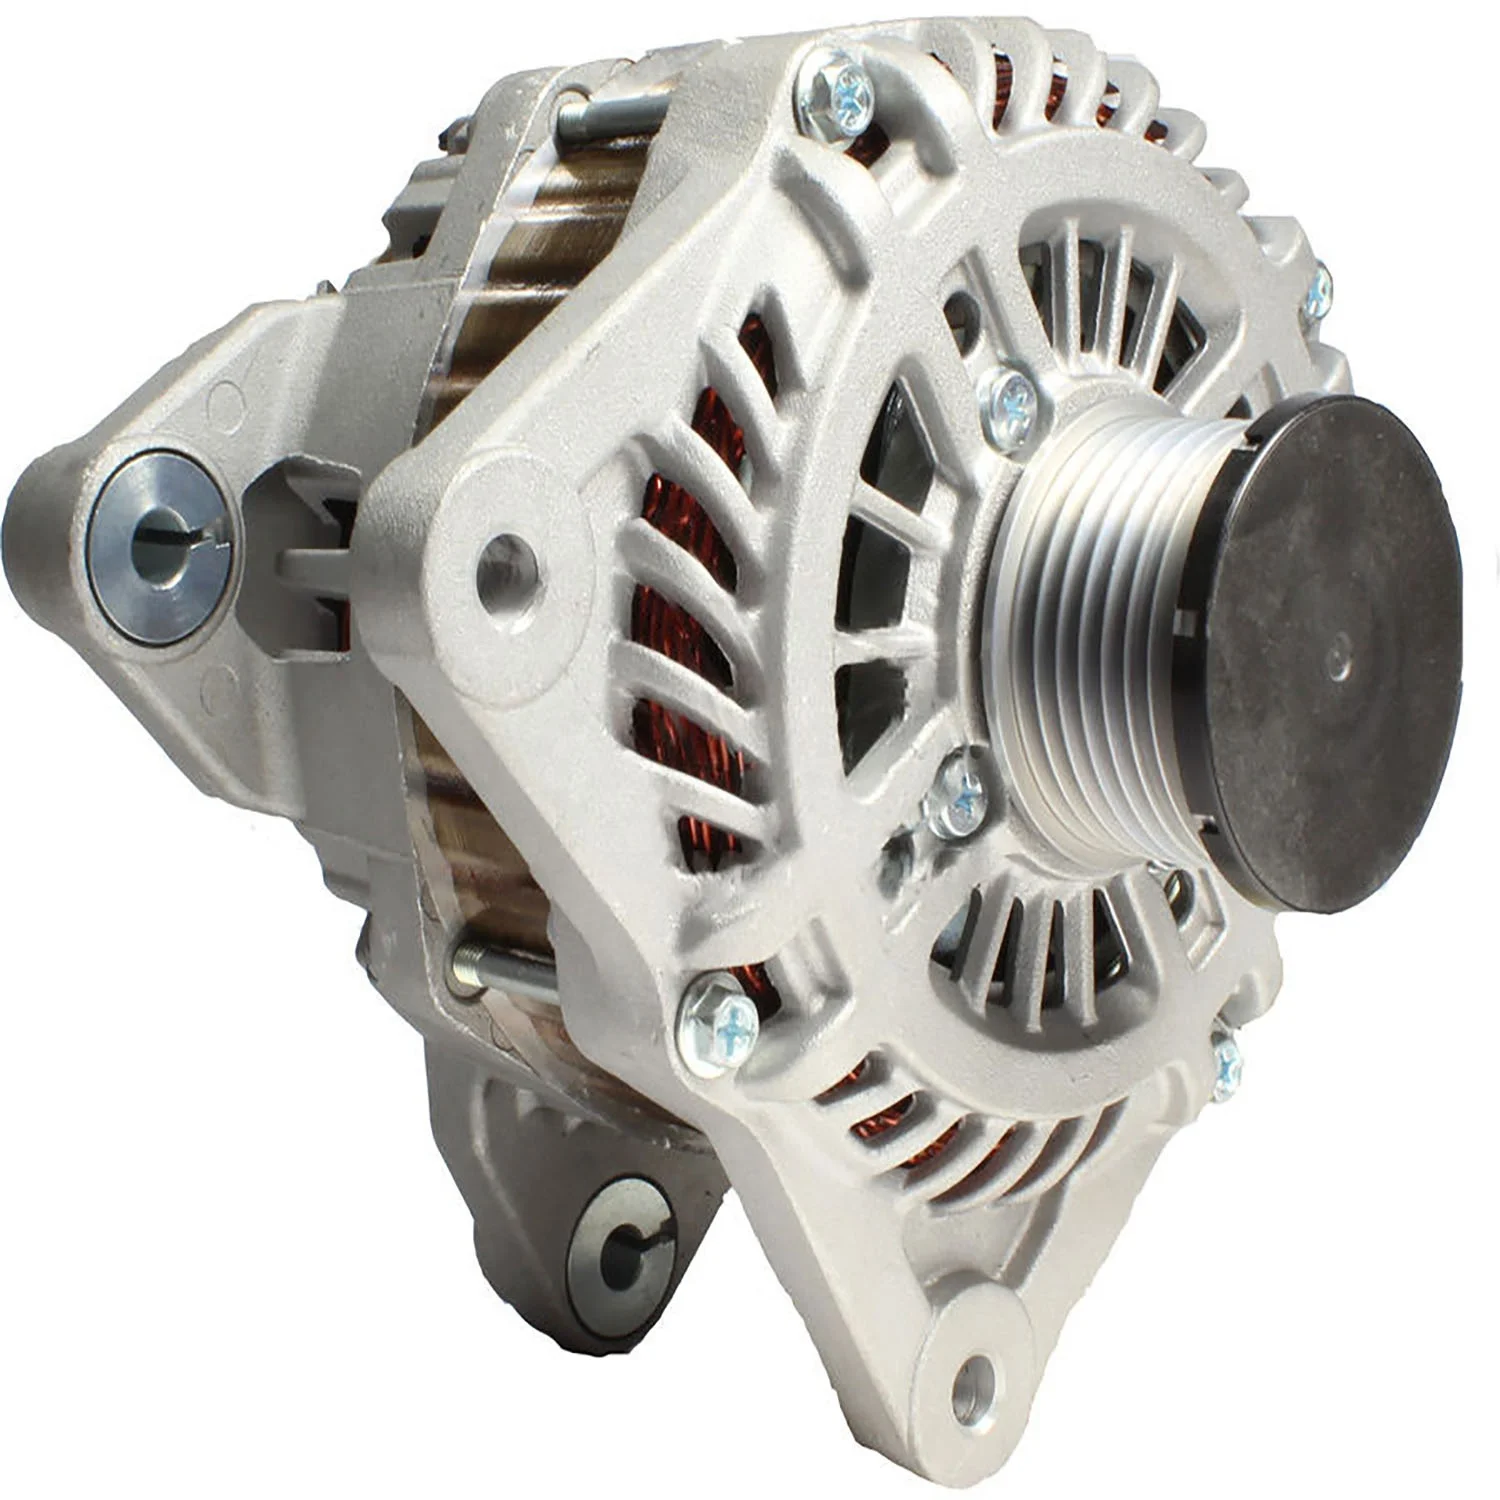 

Auto Dynamo Alternator Generator For Delco Lucas Mitsubishi Nisan CAL35202 CAL35202AS CAL35202ES CAL35202OS CAL35202RS